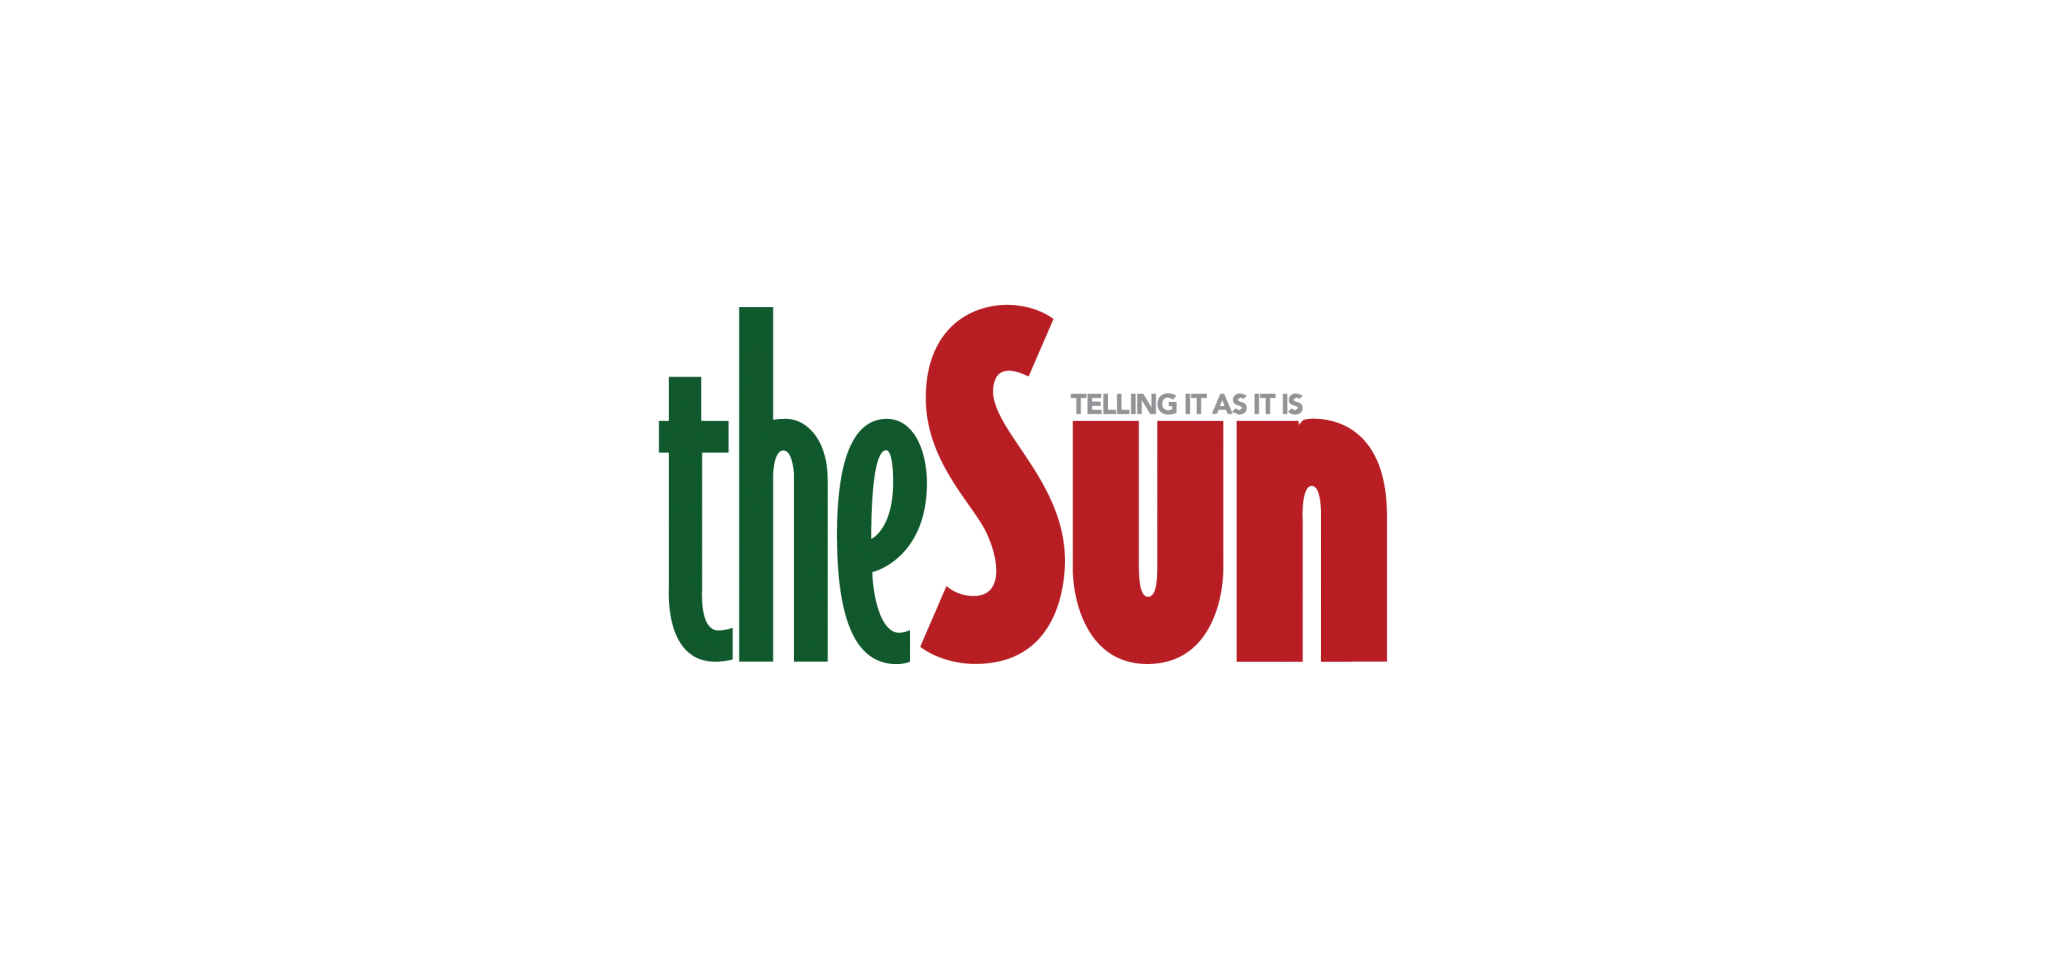 The Sun Logo Vector Download – vectorlogo4u